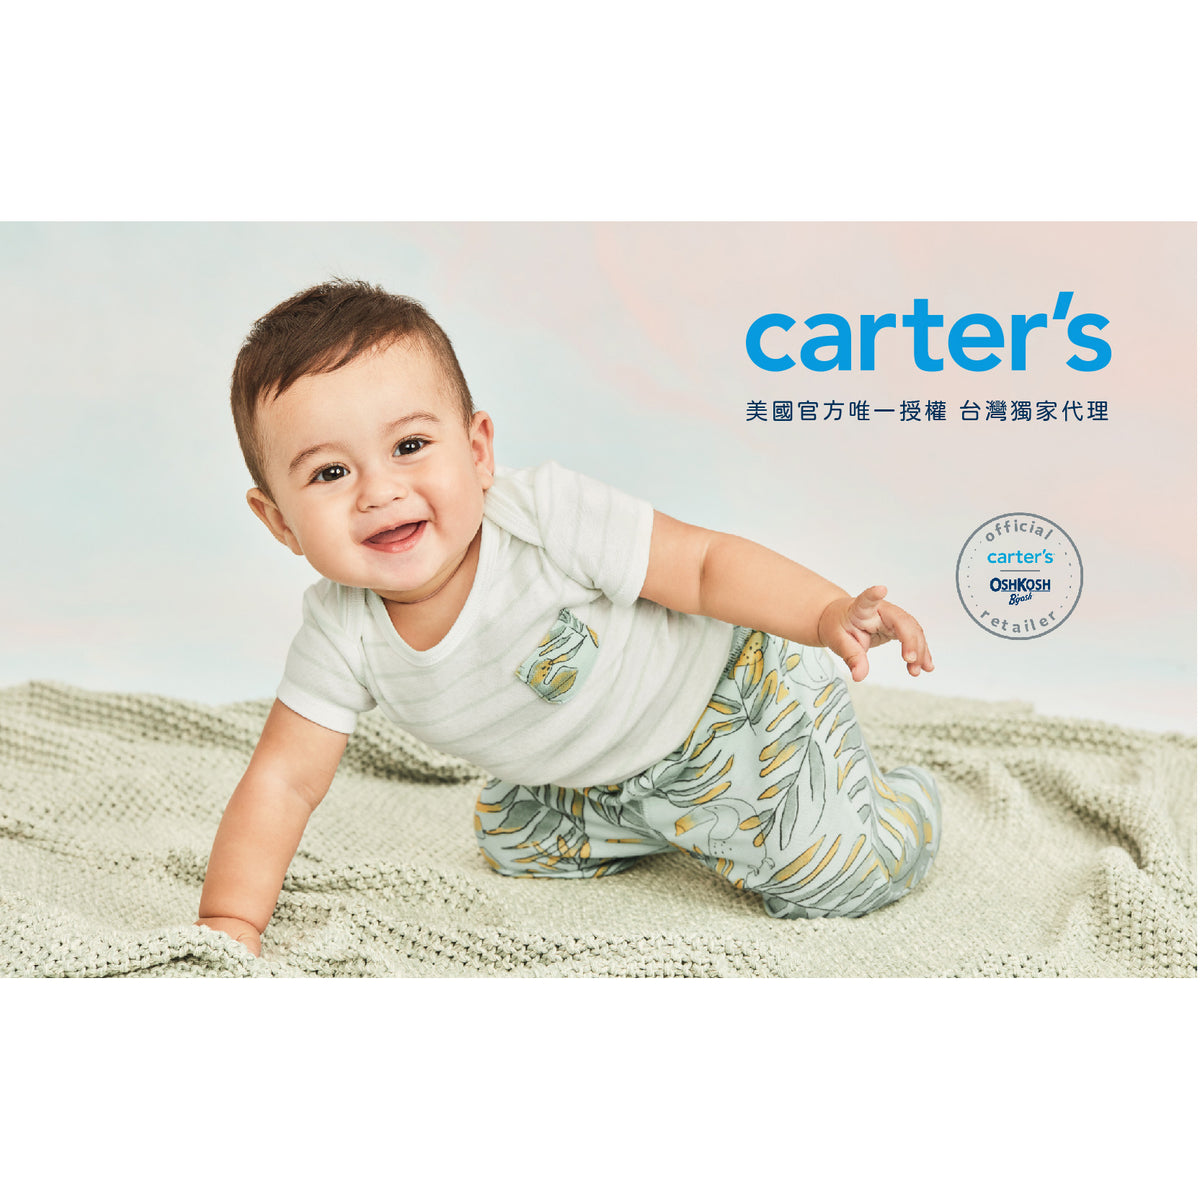 Carter's 清新休閒3件組套裝(6M-24M)